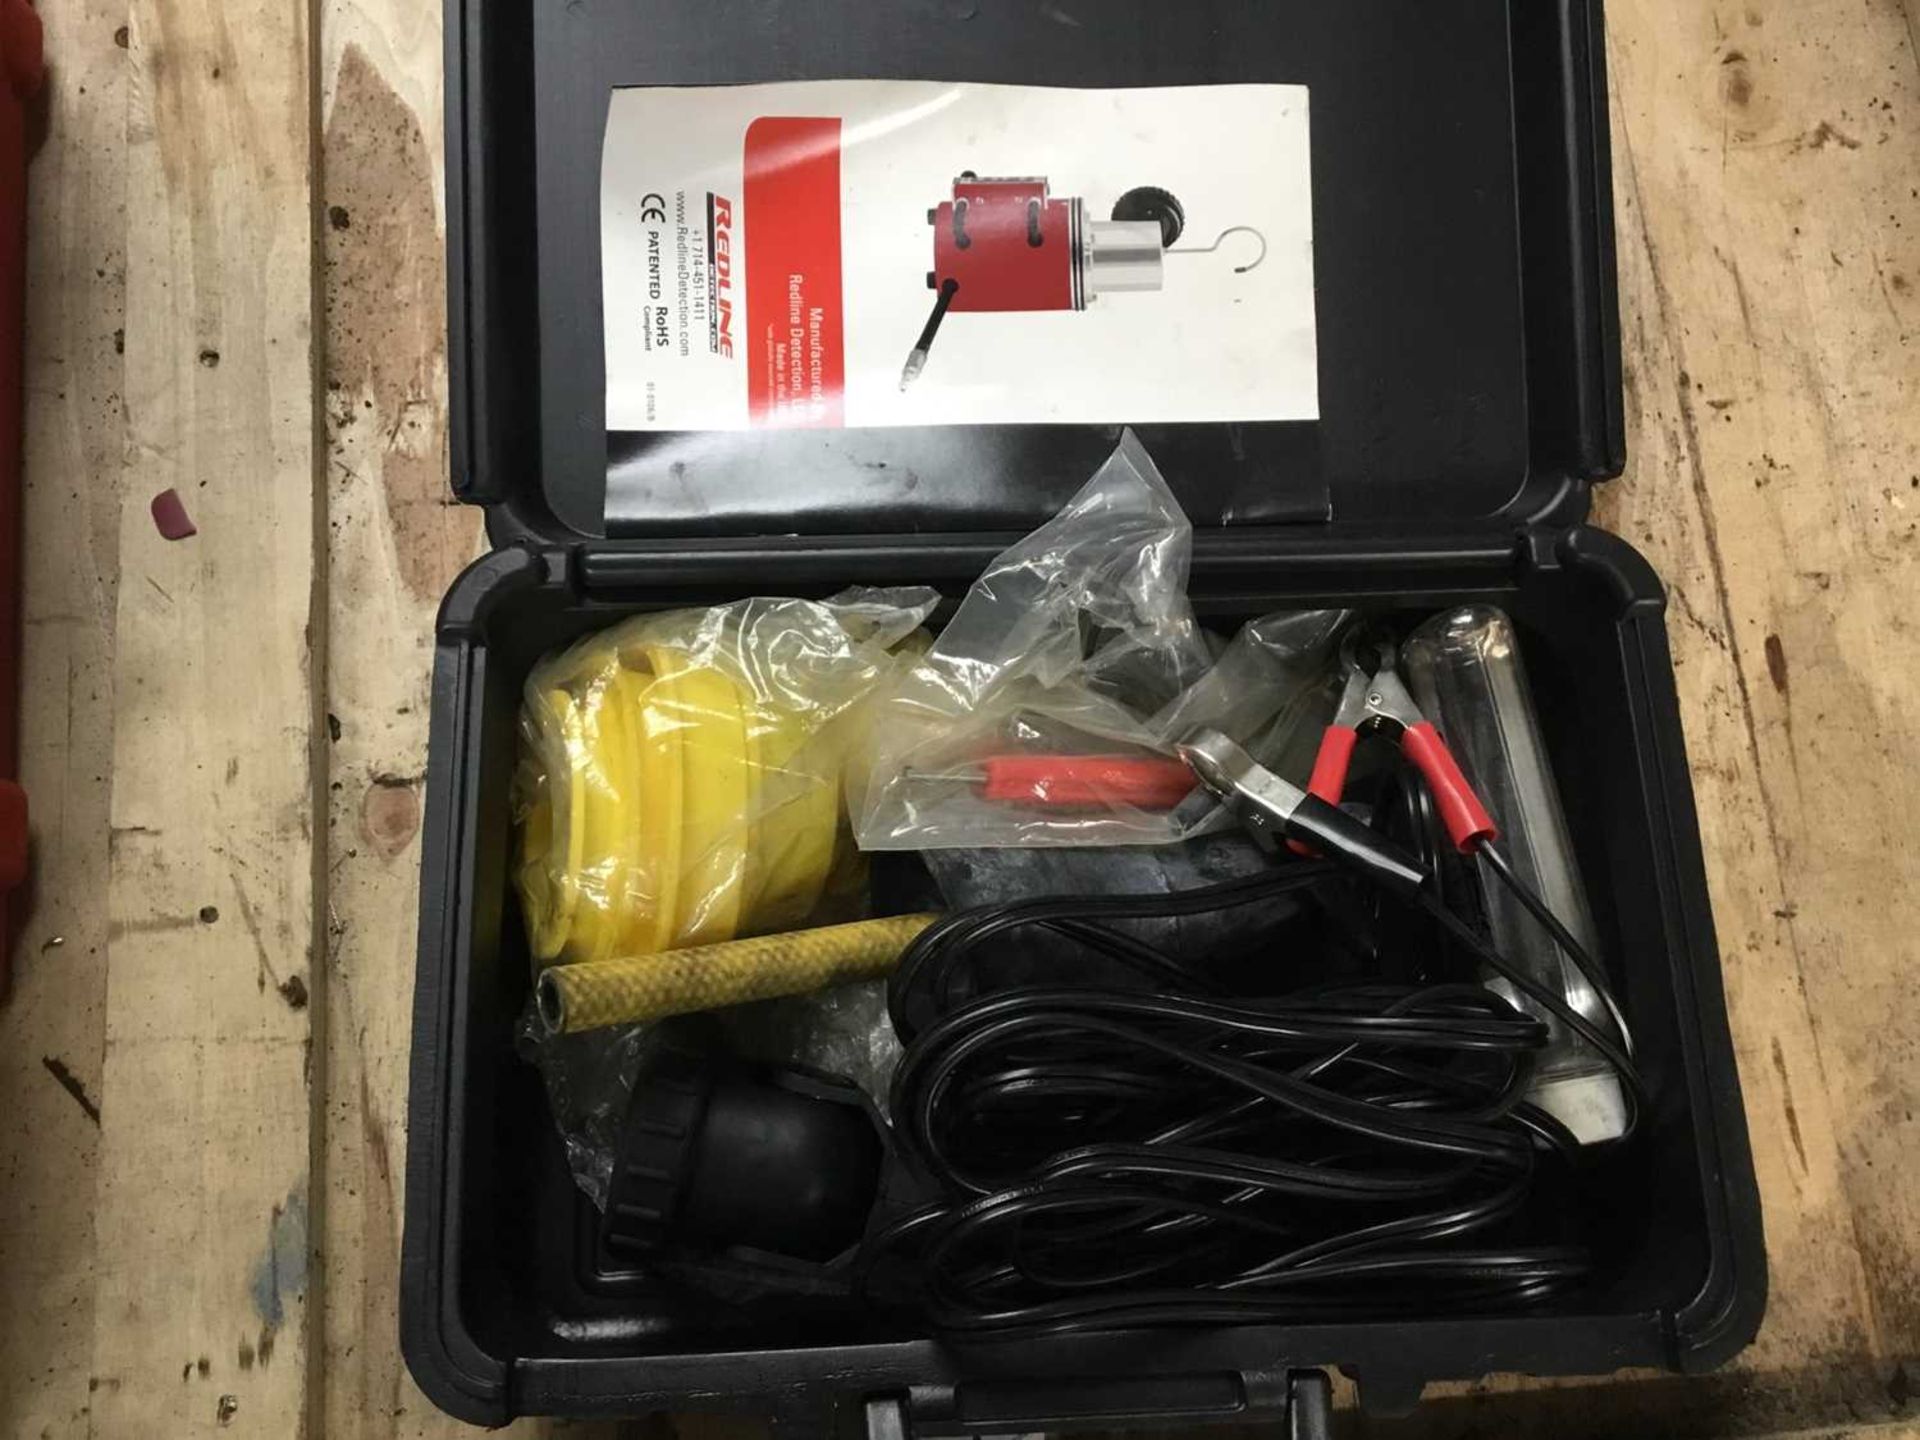 Smoke pro diagnostic leak detector accesories, cased